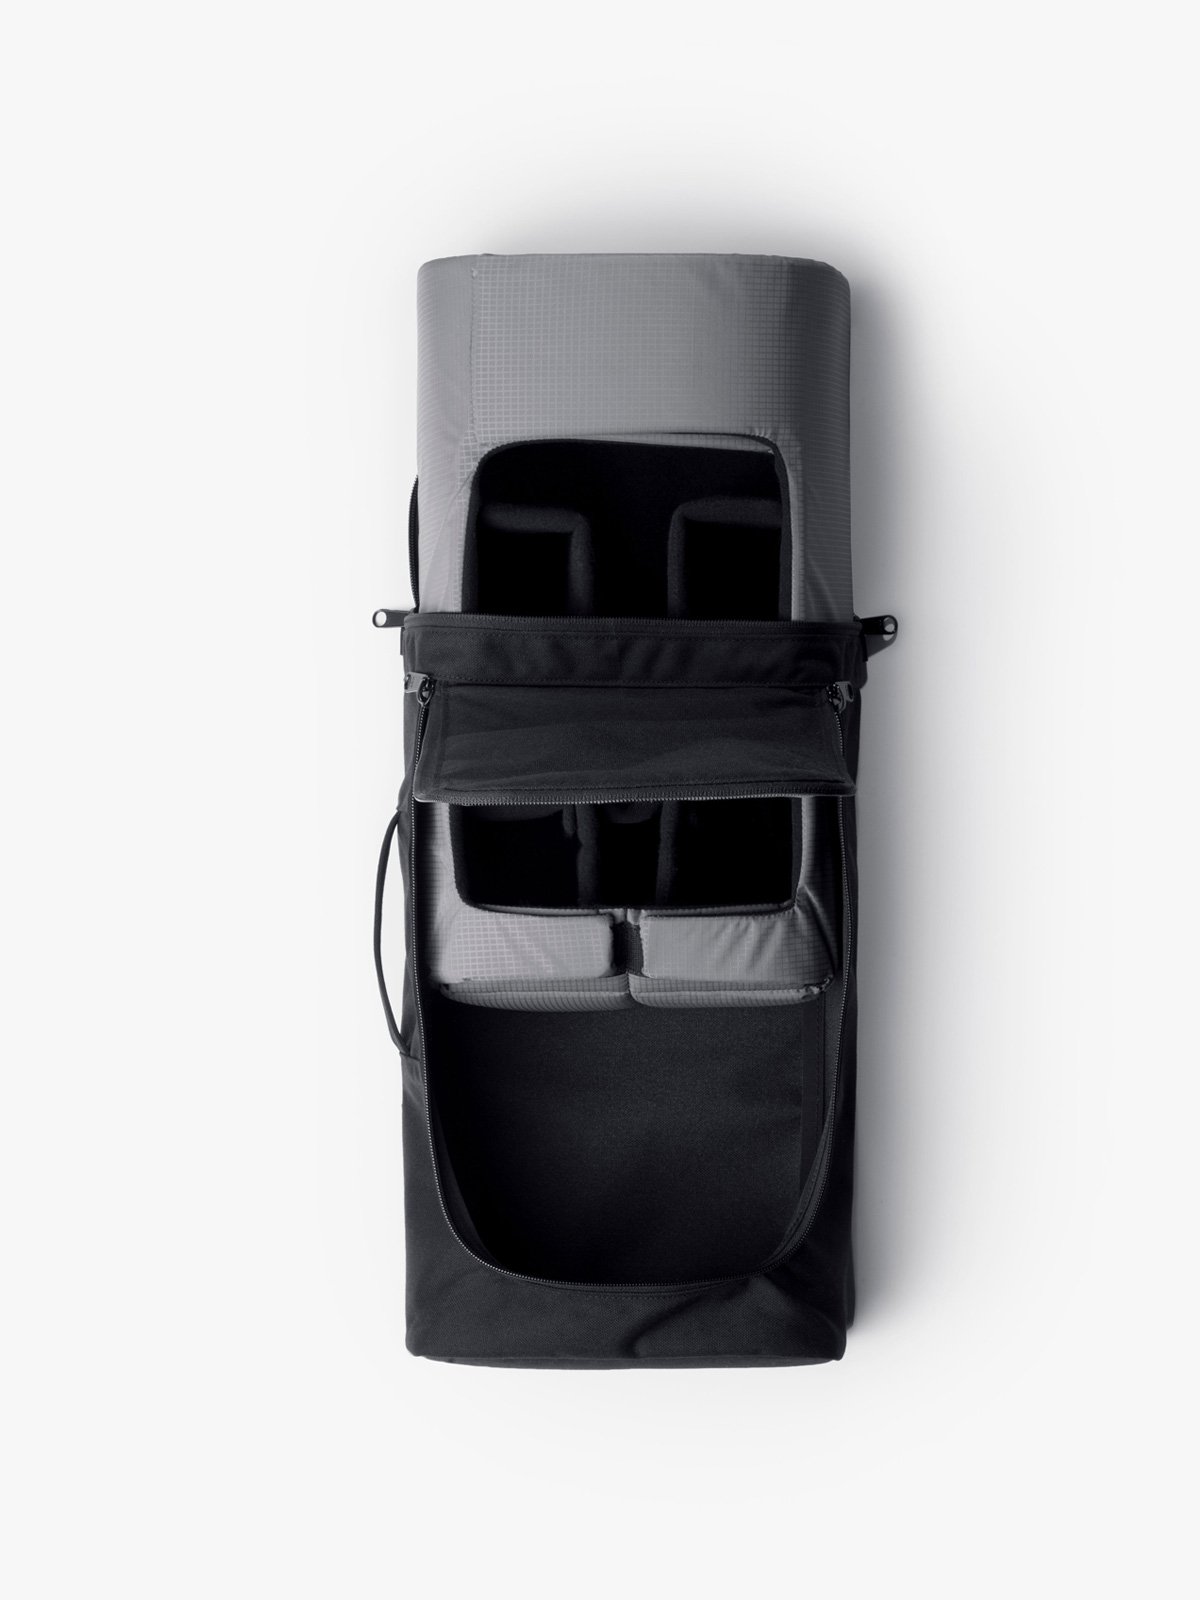 Capsule by Mission Workshop - Weersbestendige tassen & technische kleding - San Francisco & Los Angeles - Gemaakt om lang mee te gaan - Voor altijd gegarandeerd